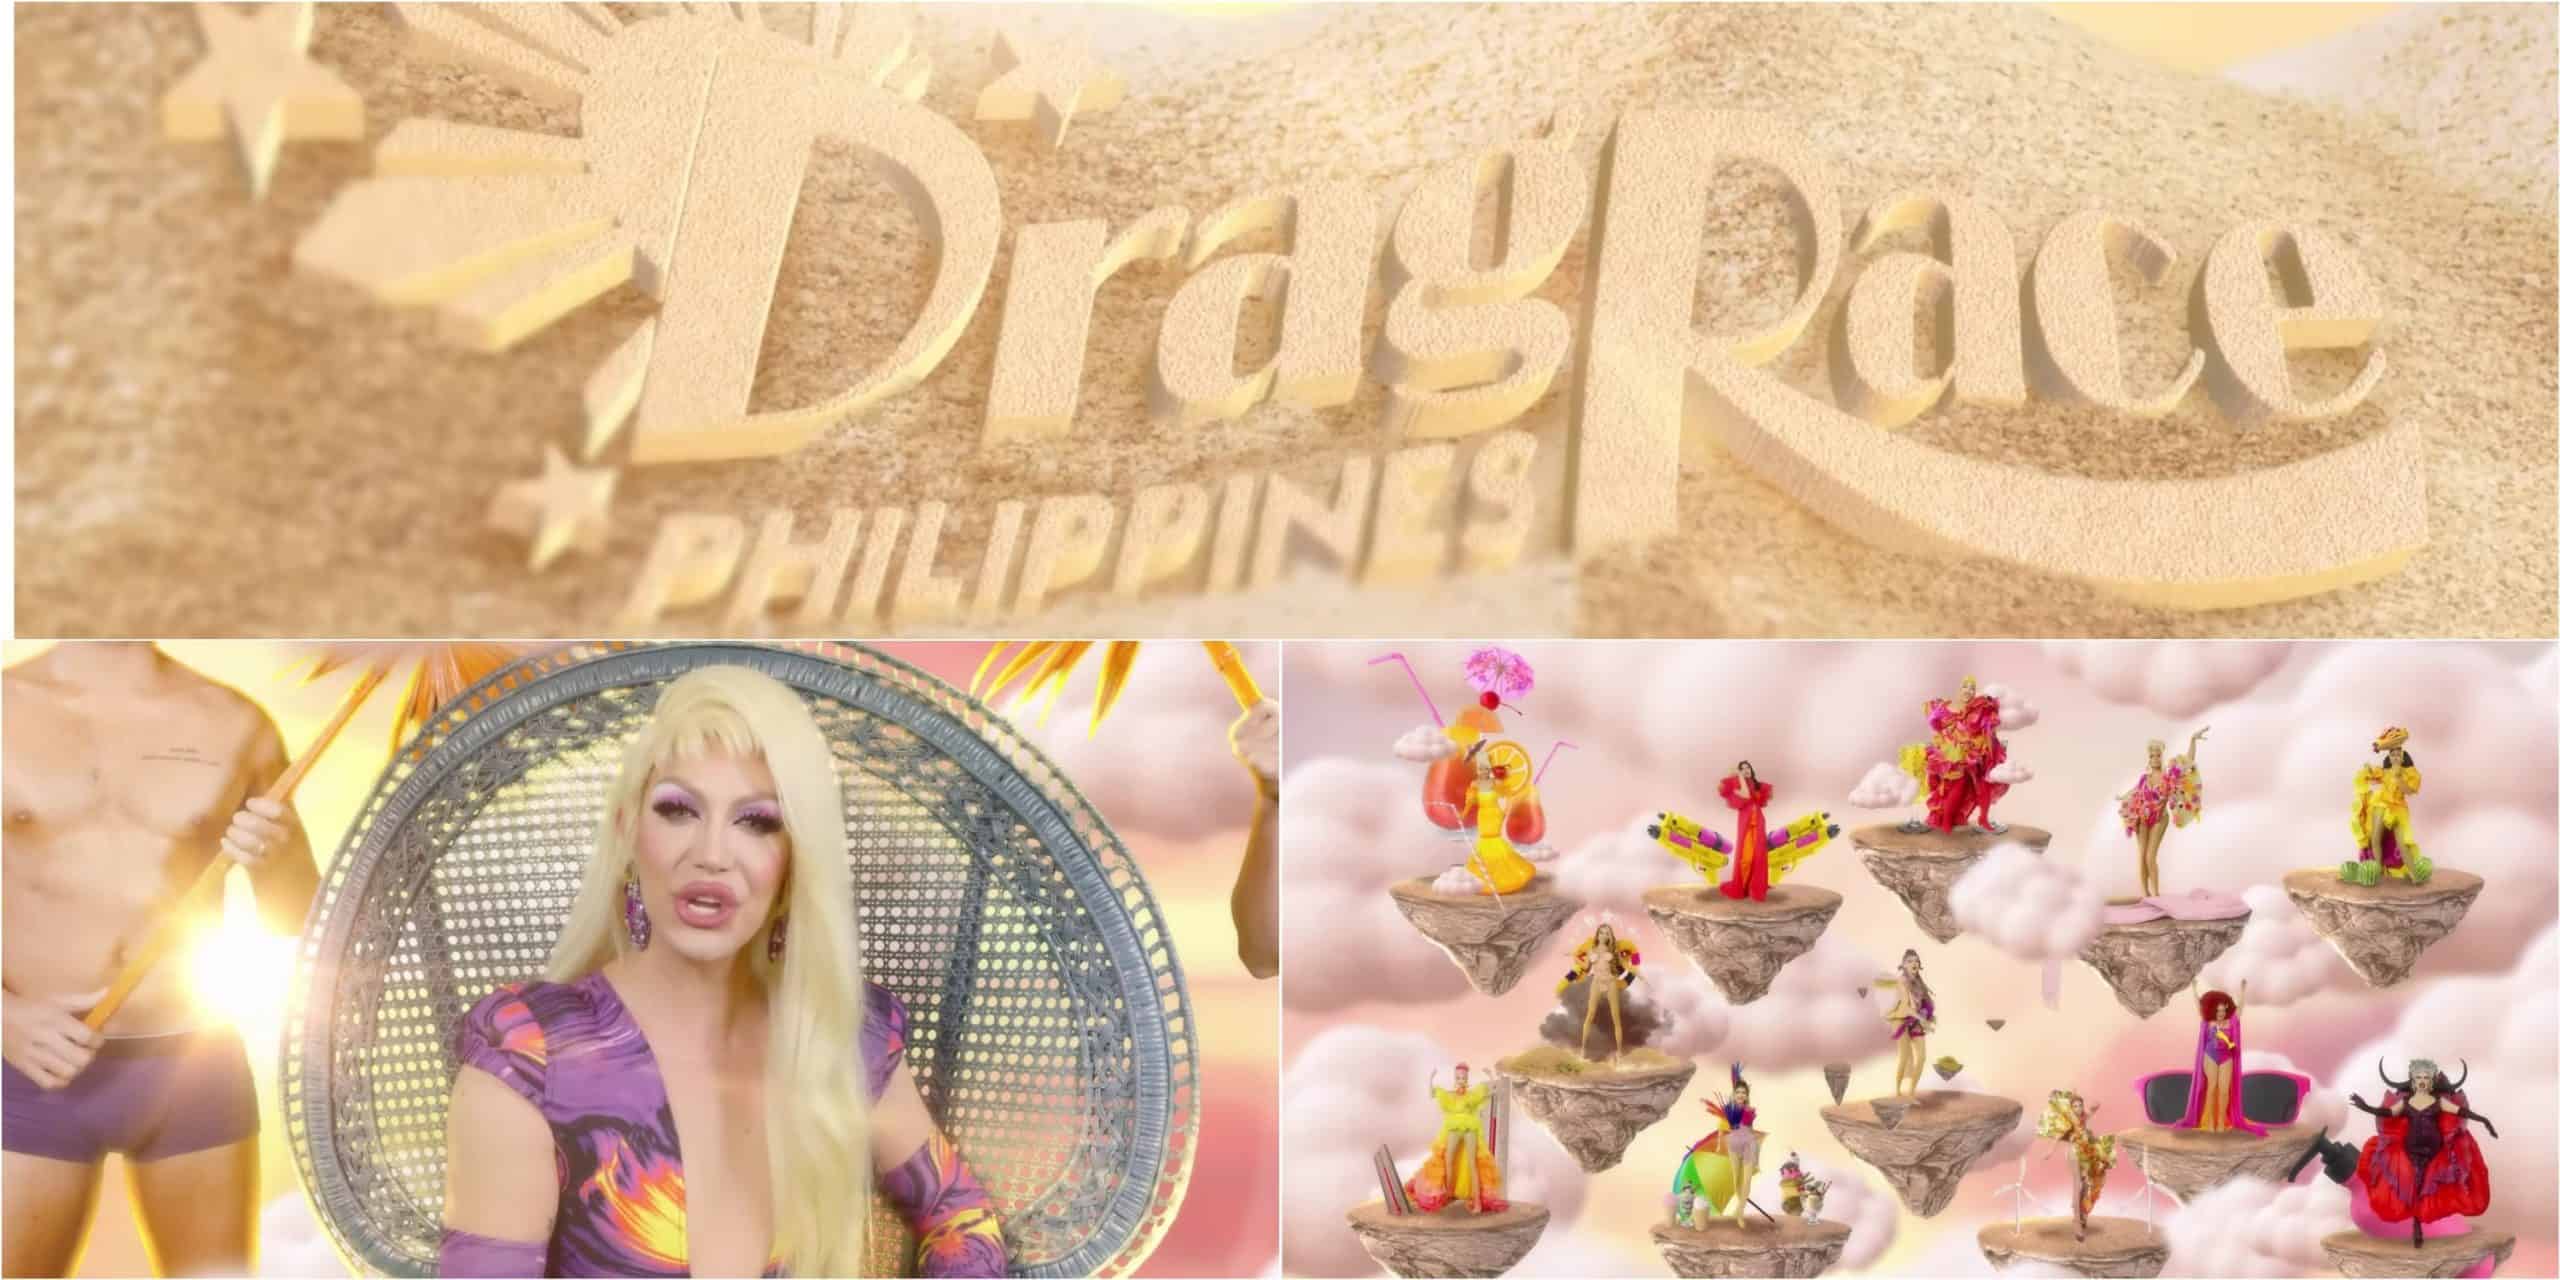 Filipino Show Drag Race Philippines Season 2 Episode 1 Release Date